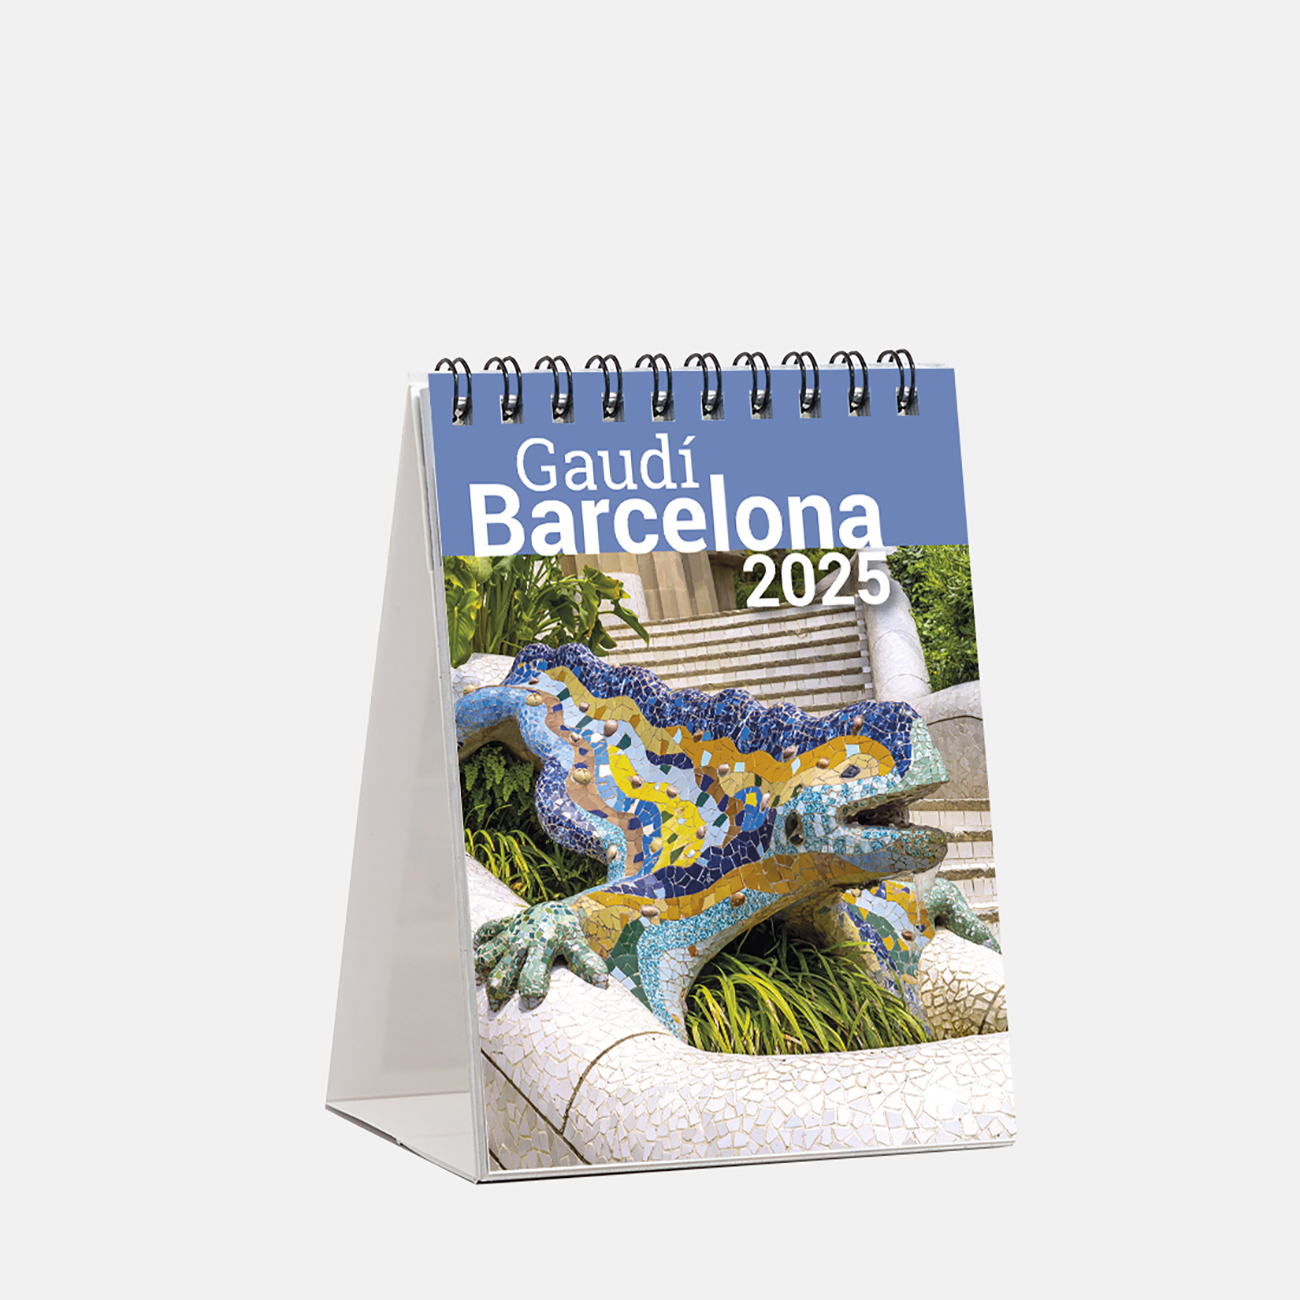 Calendrier 2025 Gaudí sm25g1 calendario mini 2025 gaudi